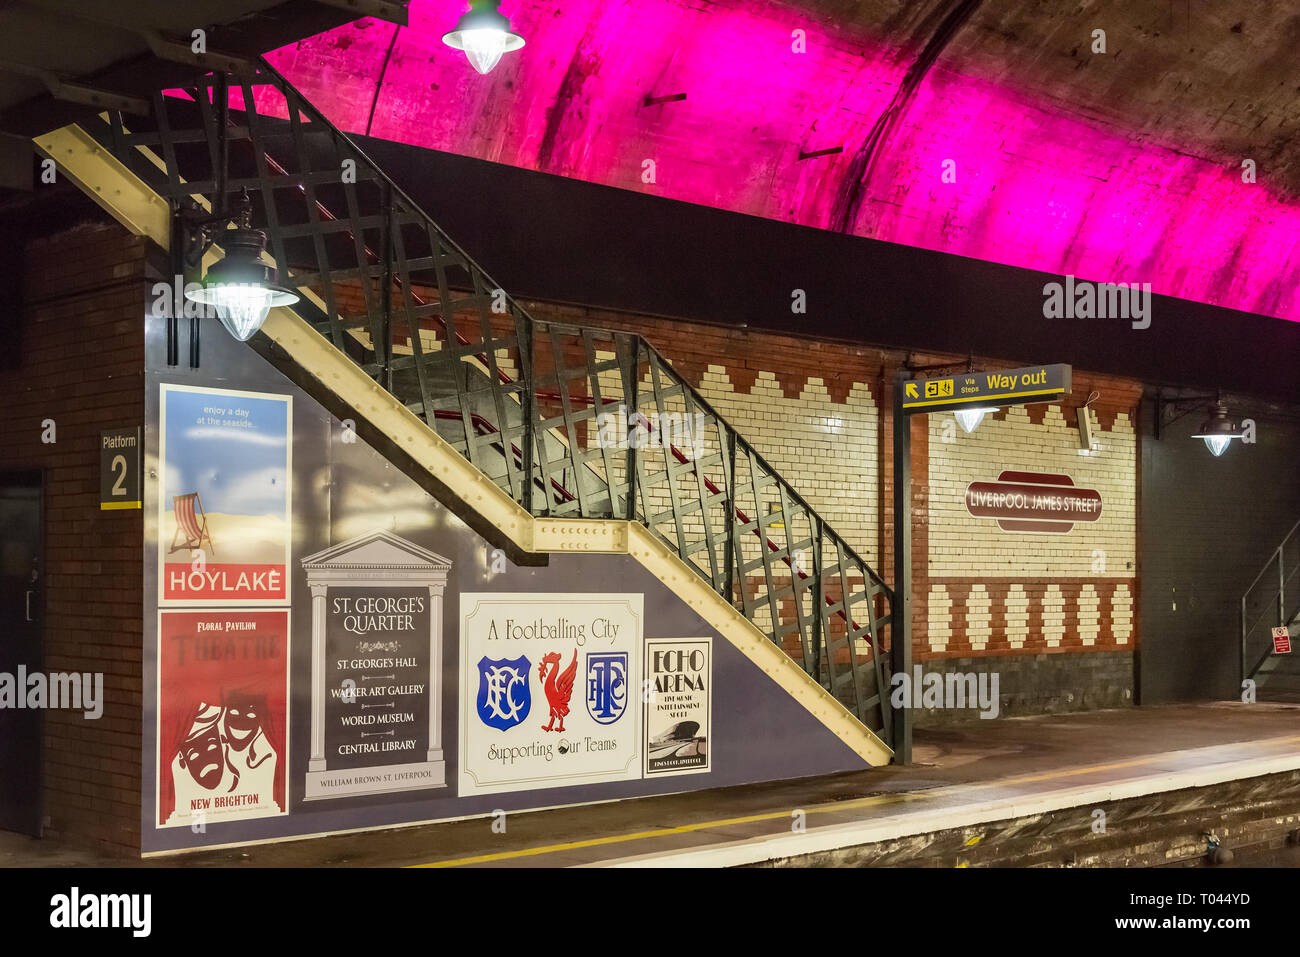 Merseyrail station James street refurb finished. Oct 28 2015 Stock Photo